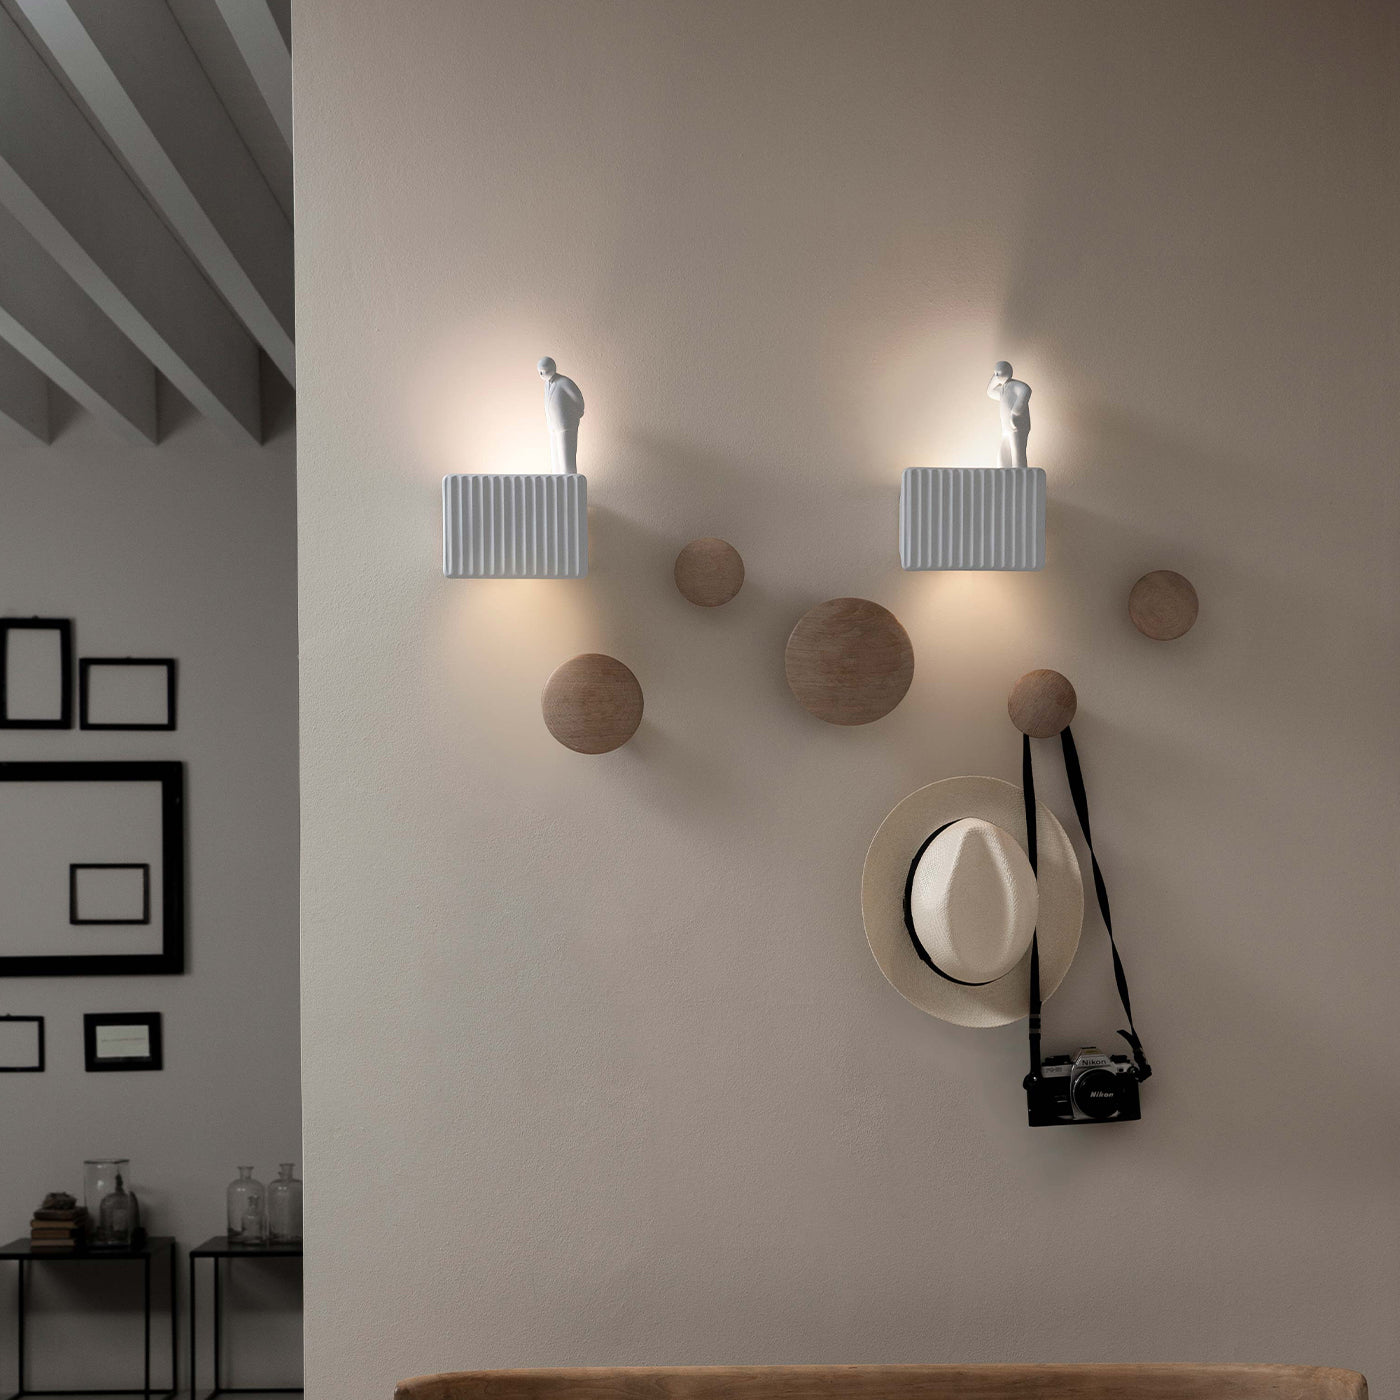 Umarell Wall Lamp by Giorgio Biscaro #2 - Alternative view 4